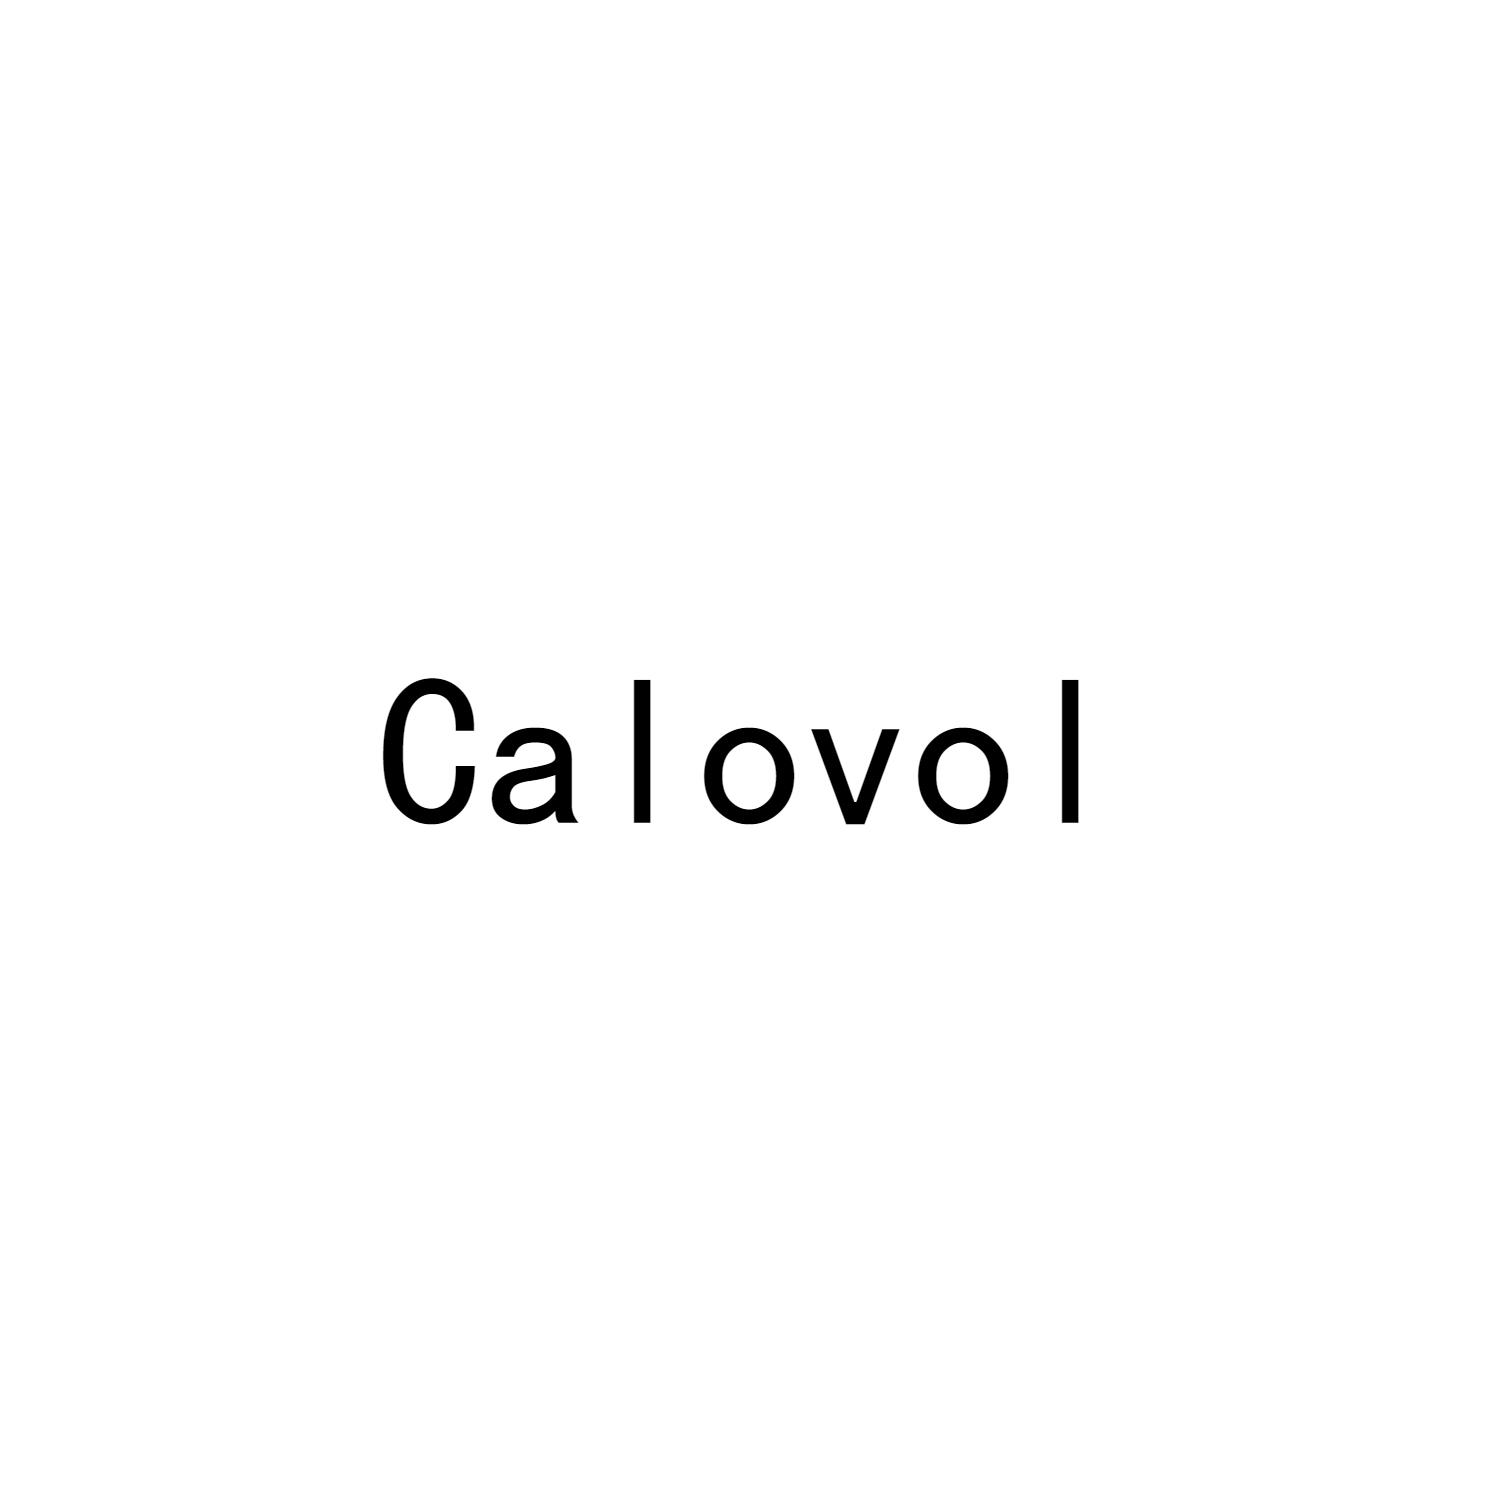 calovol 商标公告